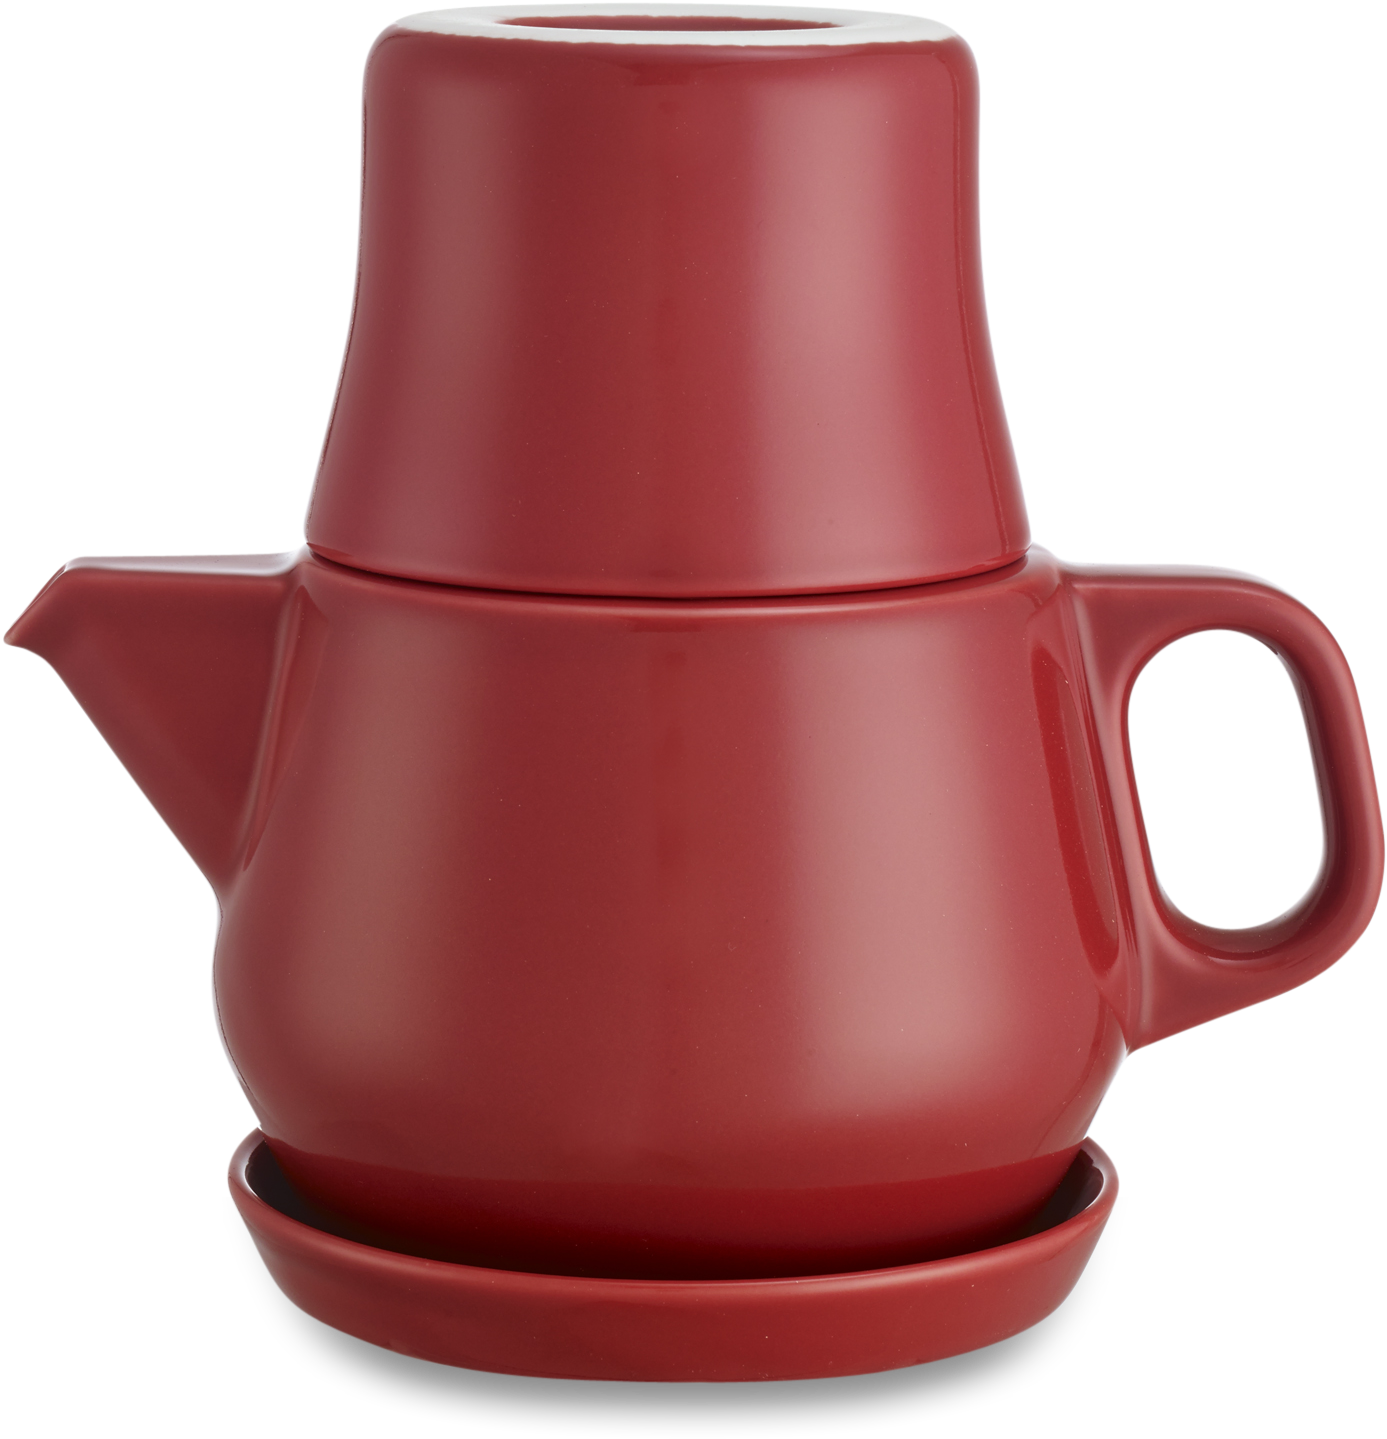 Tea Electric Kettle Coffee Cup Kinto - Tea Electric Kettle Coffee Cup Kinto (1960x1494)